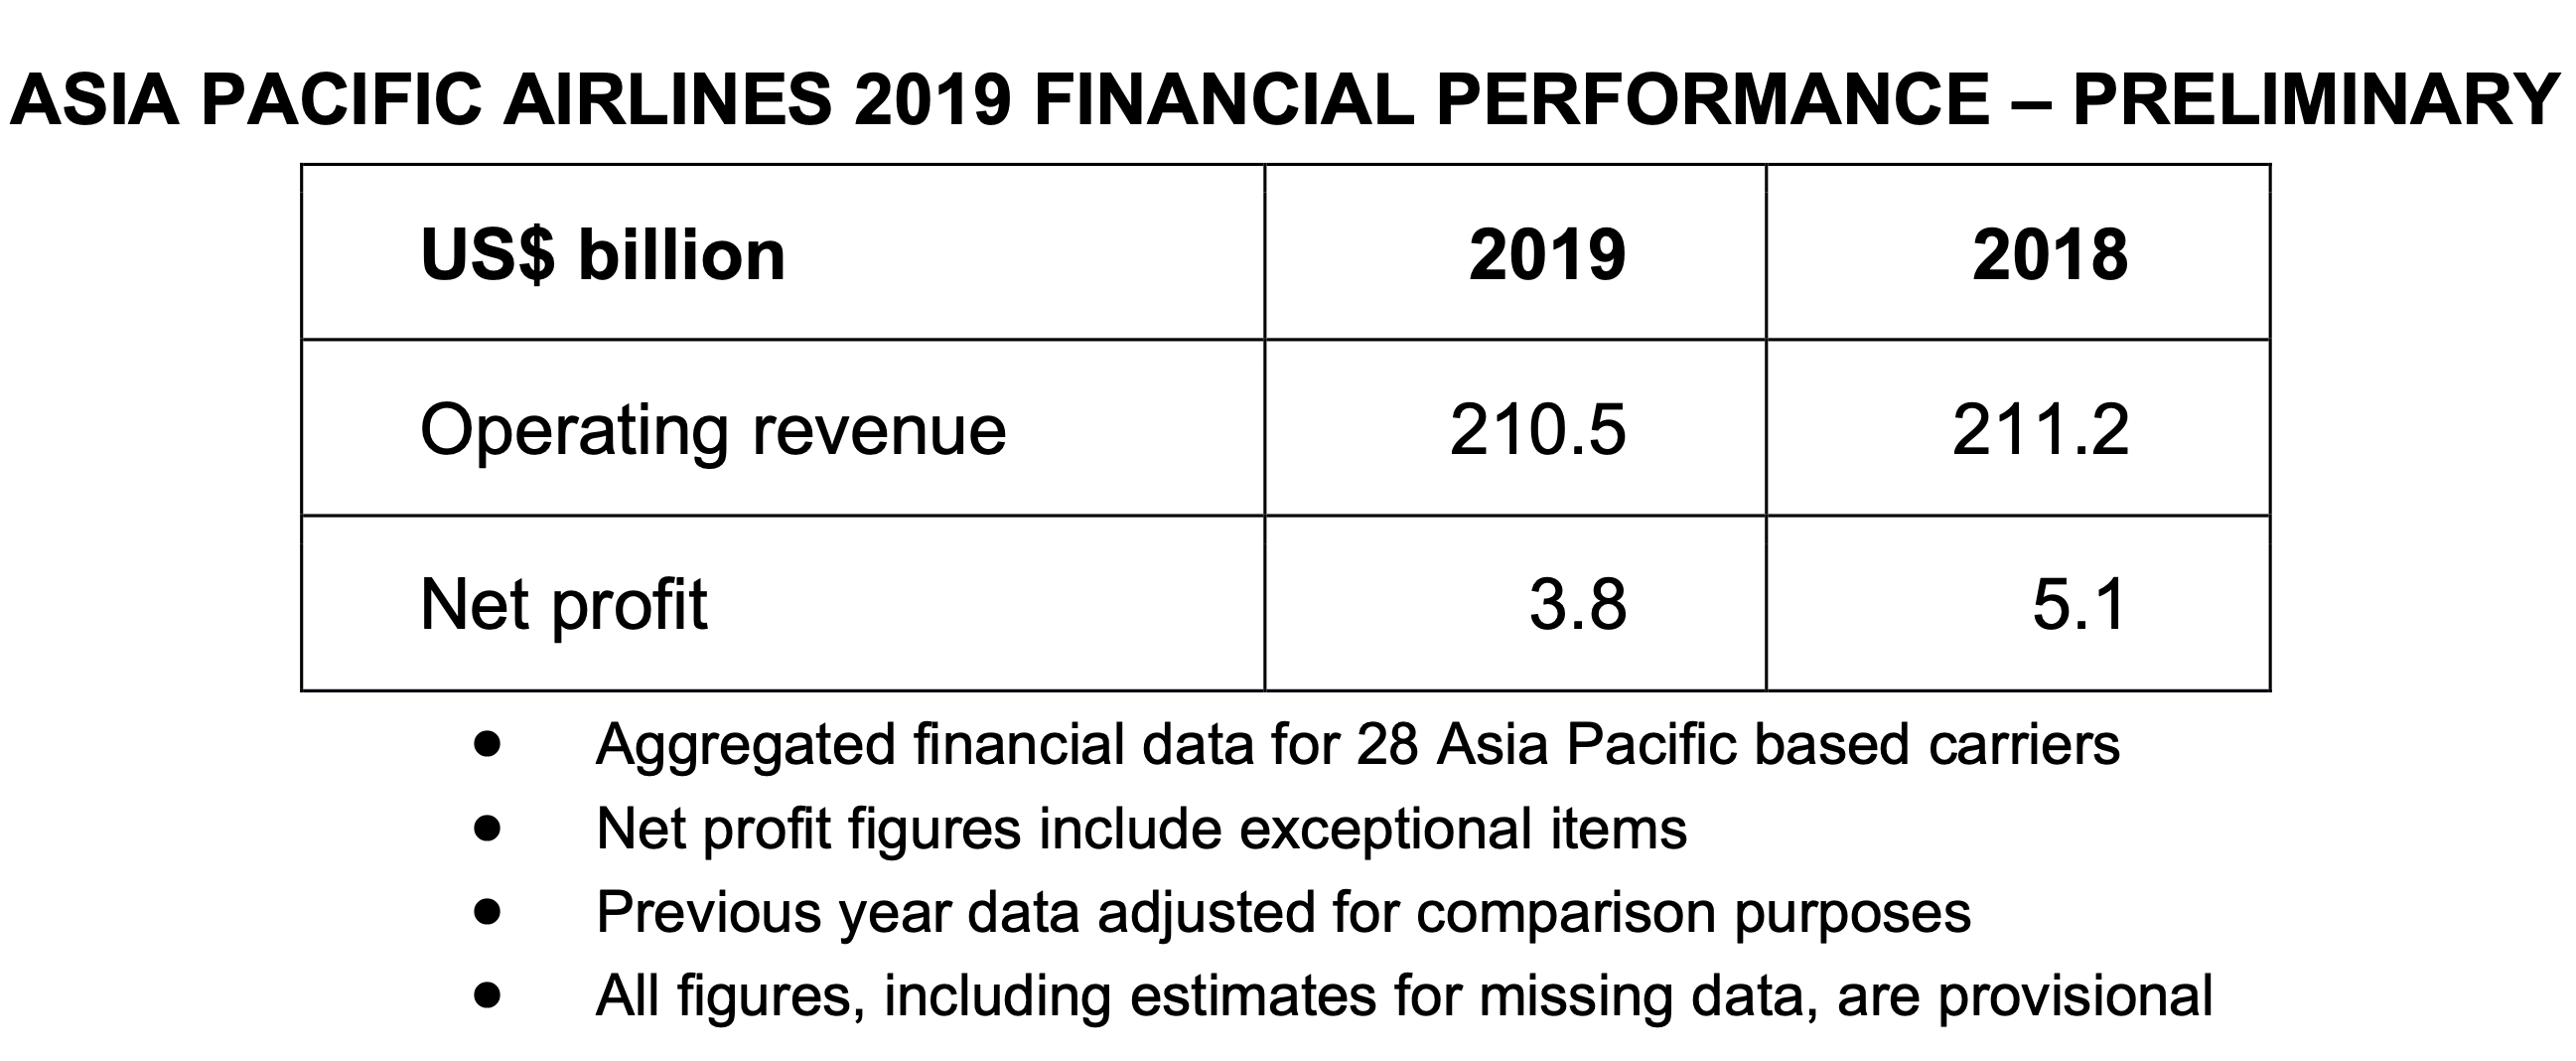 Asia Pacific airline revenue fell 25% in 2019